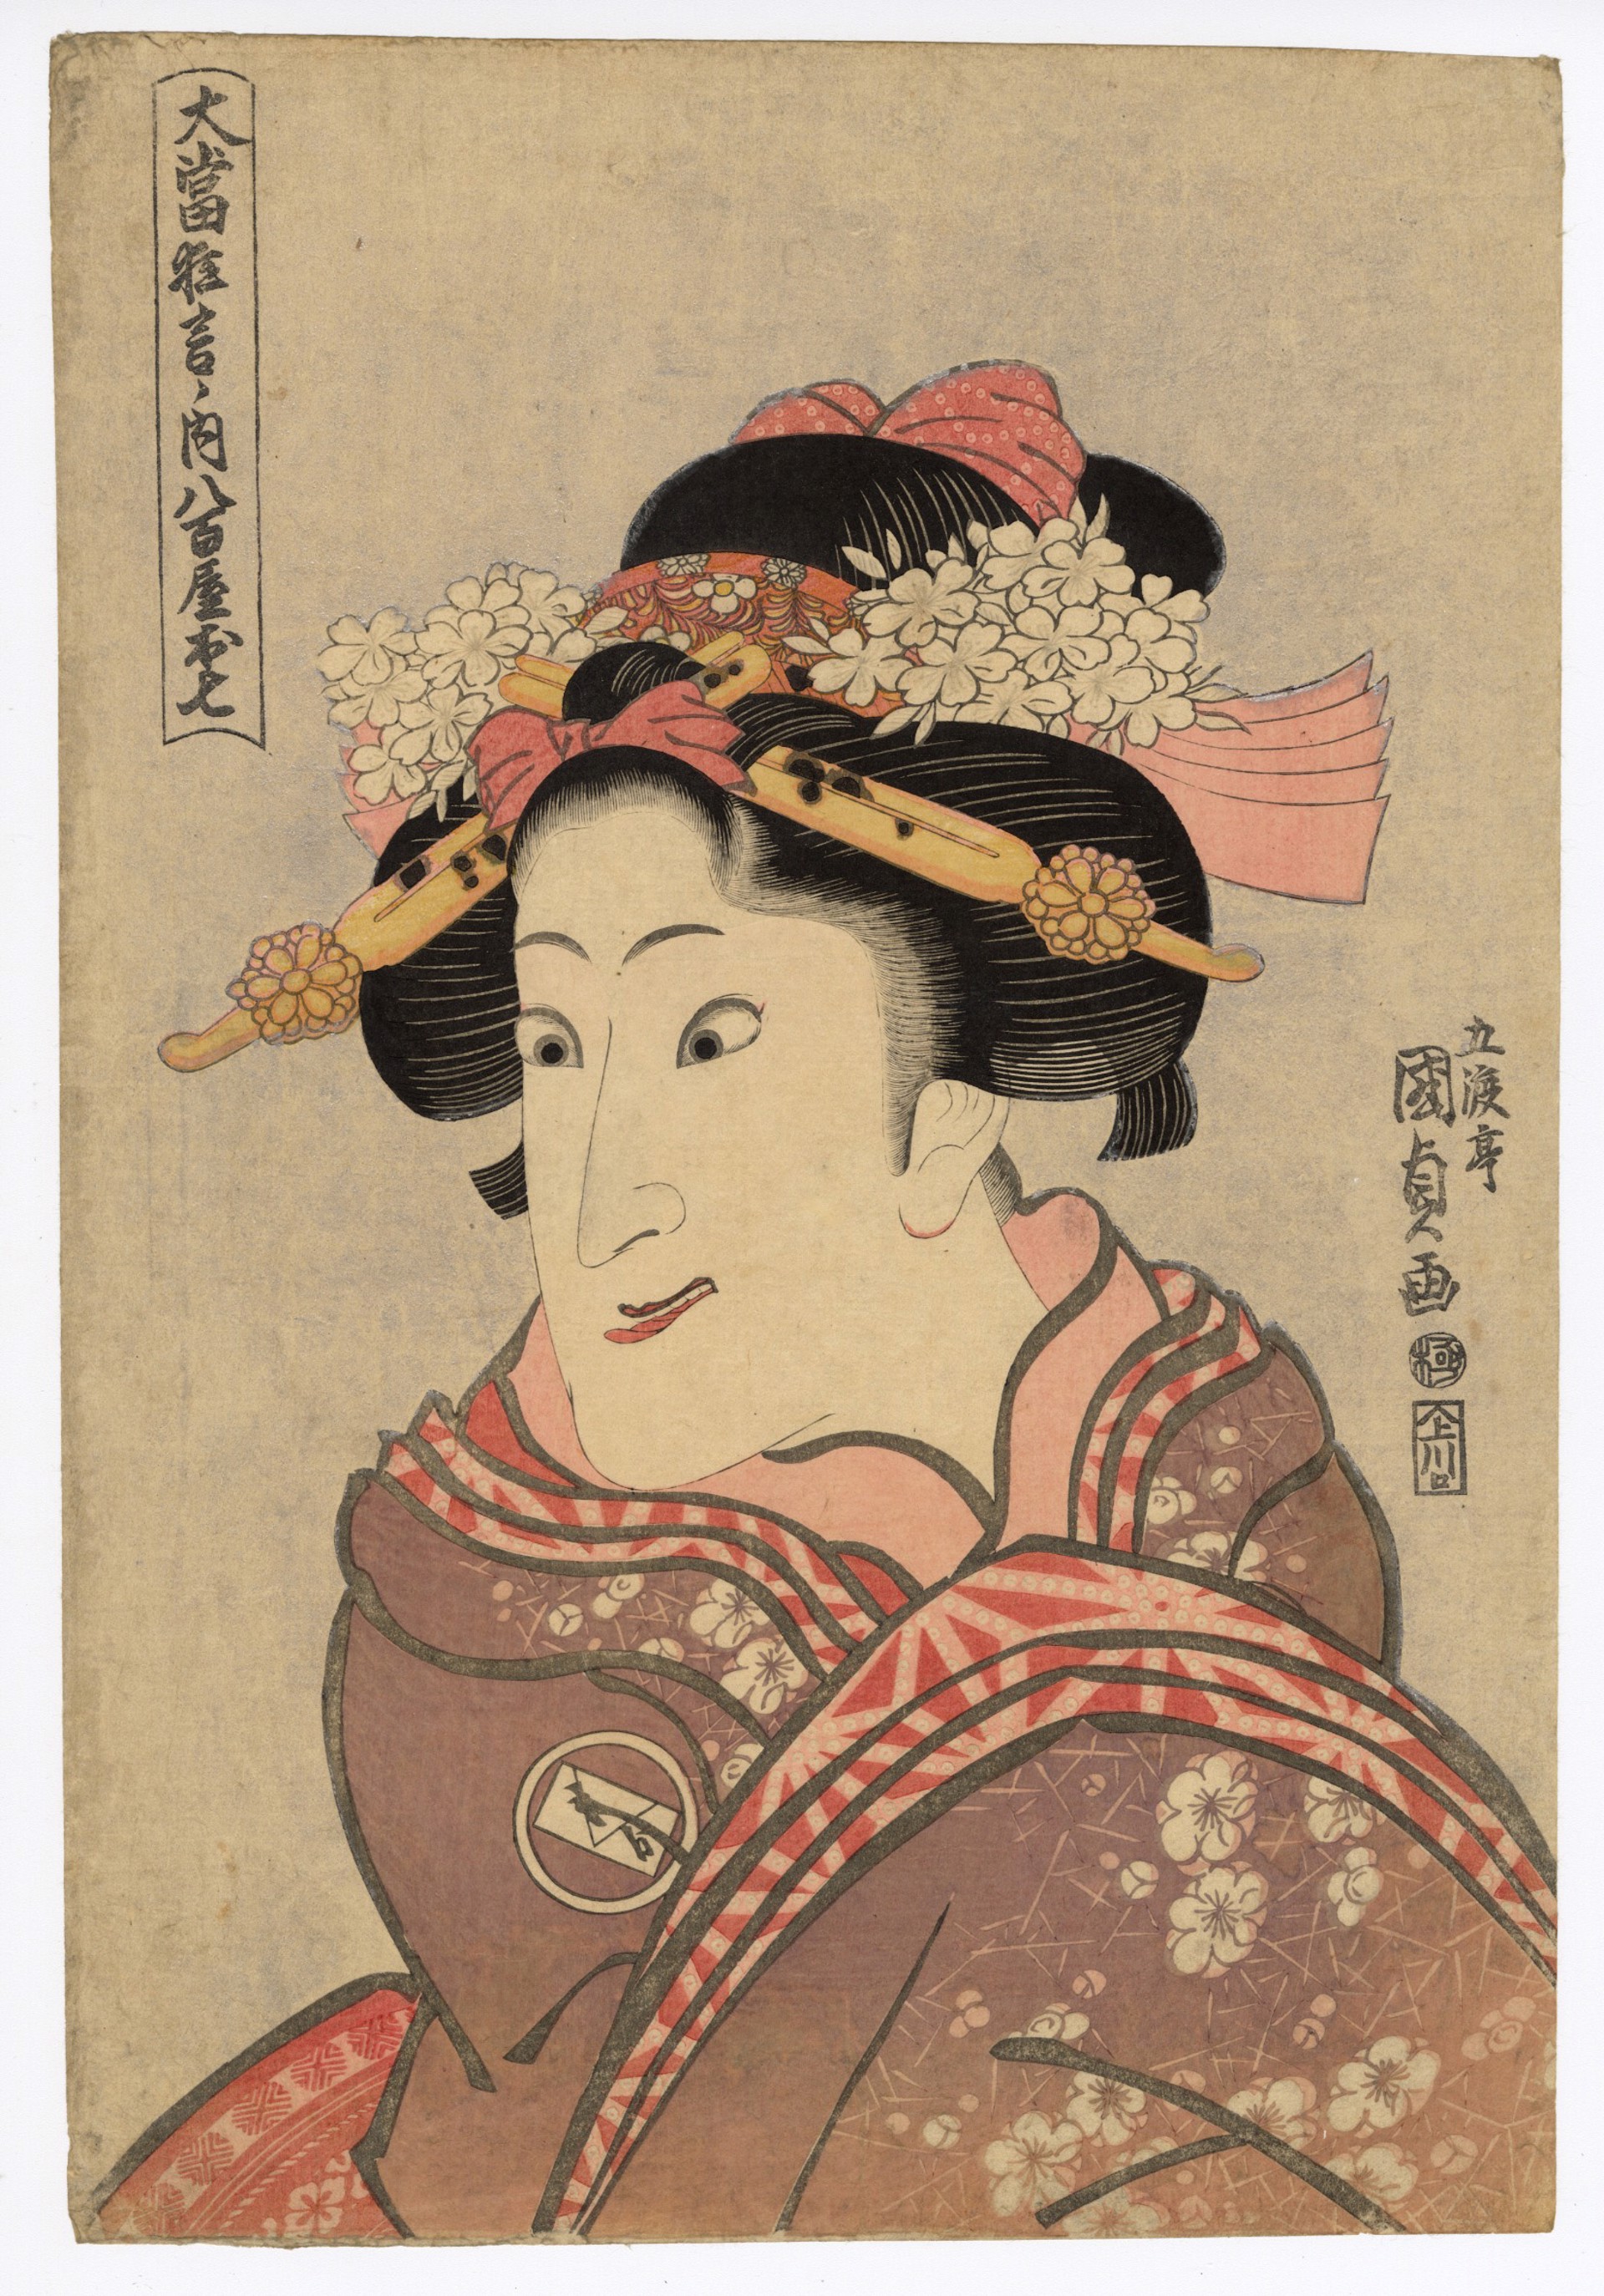 Iwai Hanshiro V as Yaoya Oshichi by Kunisada